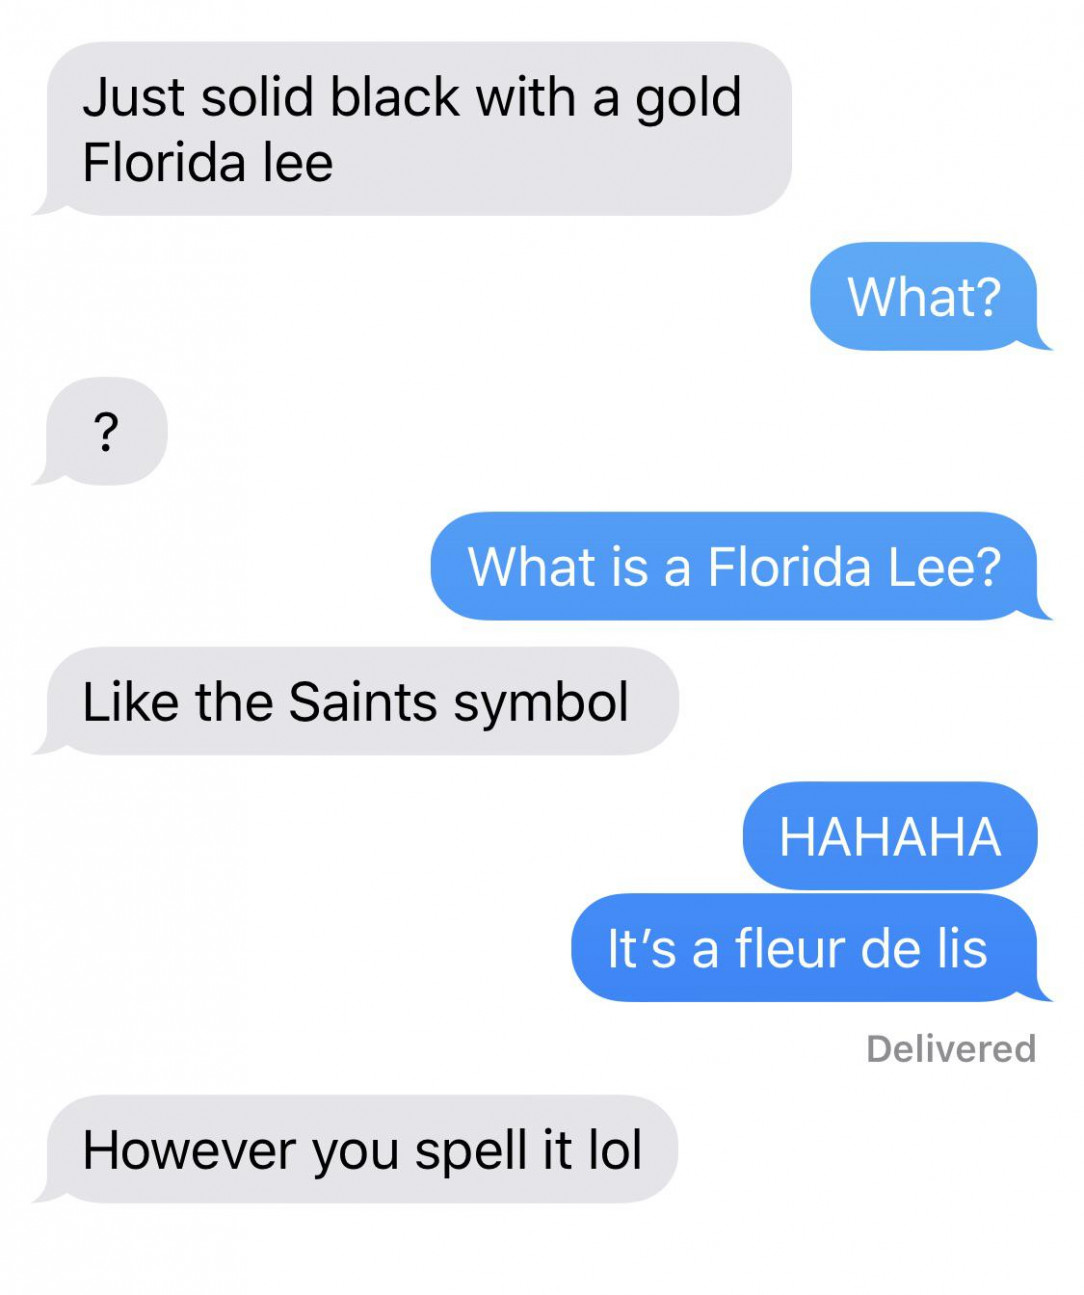 A Florida Lee?